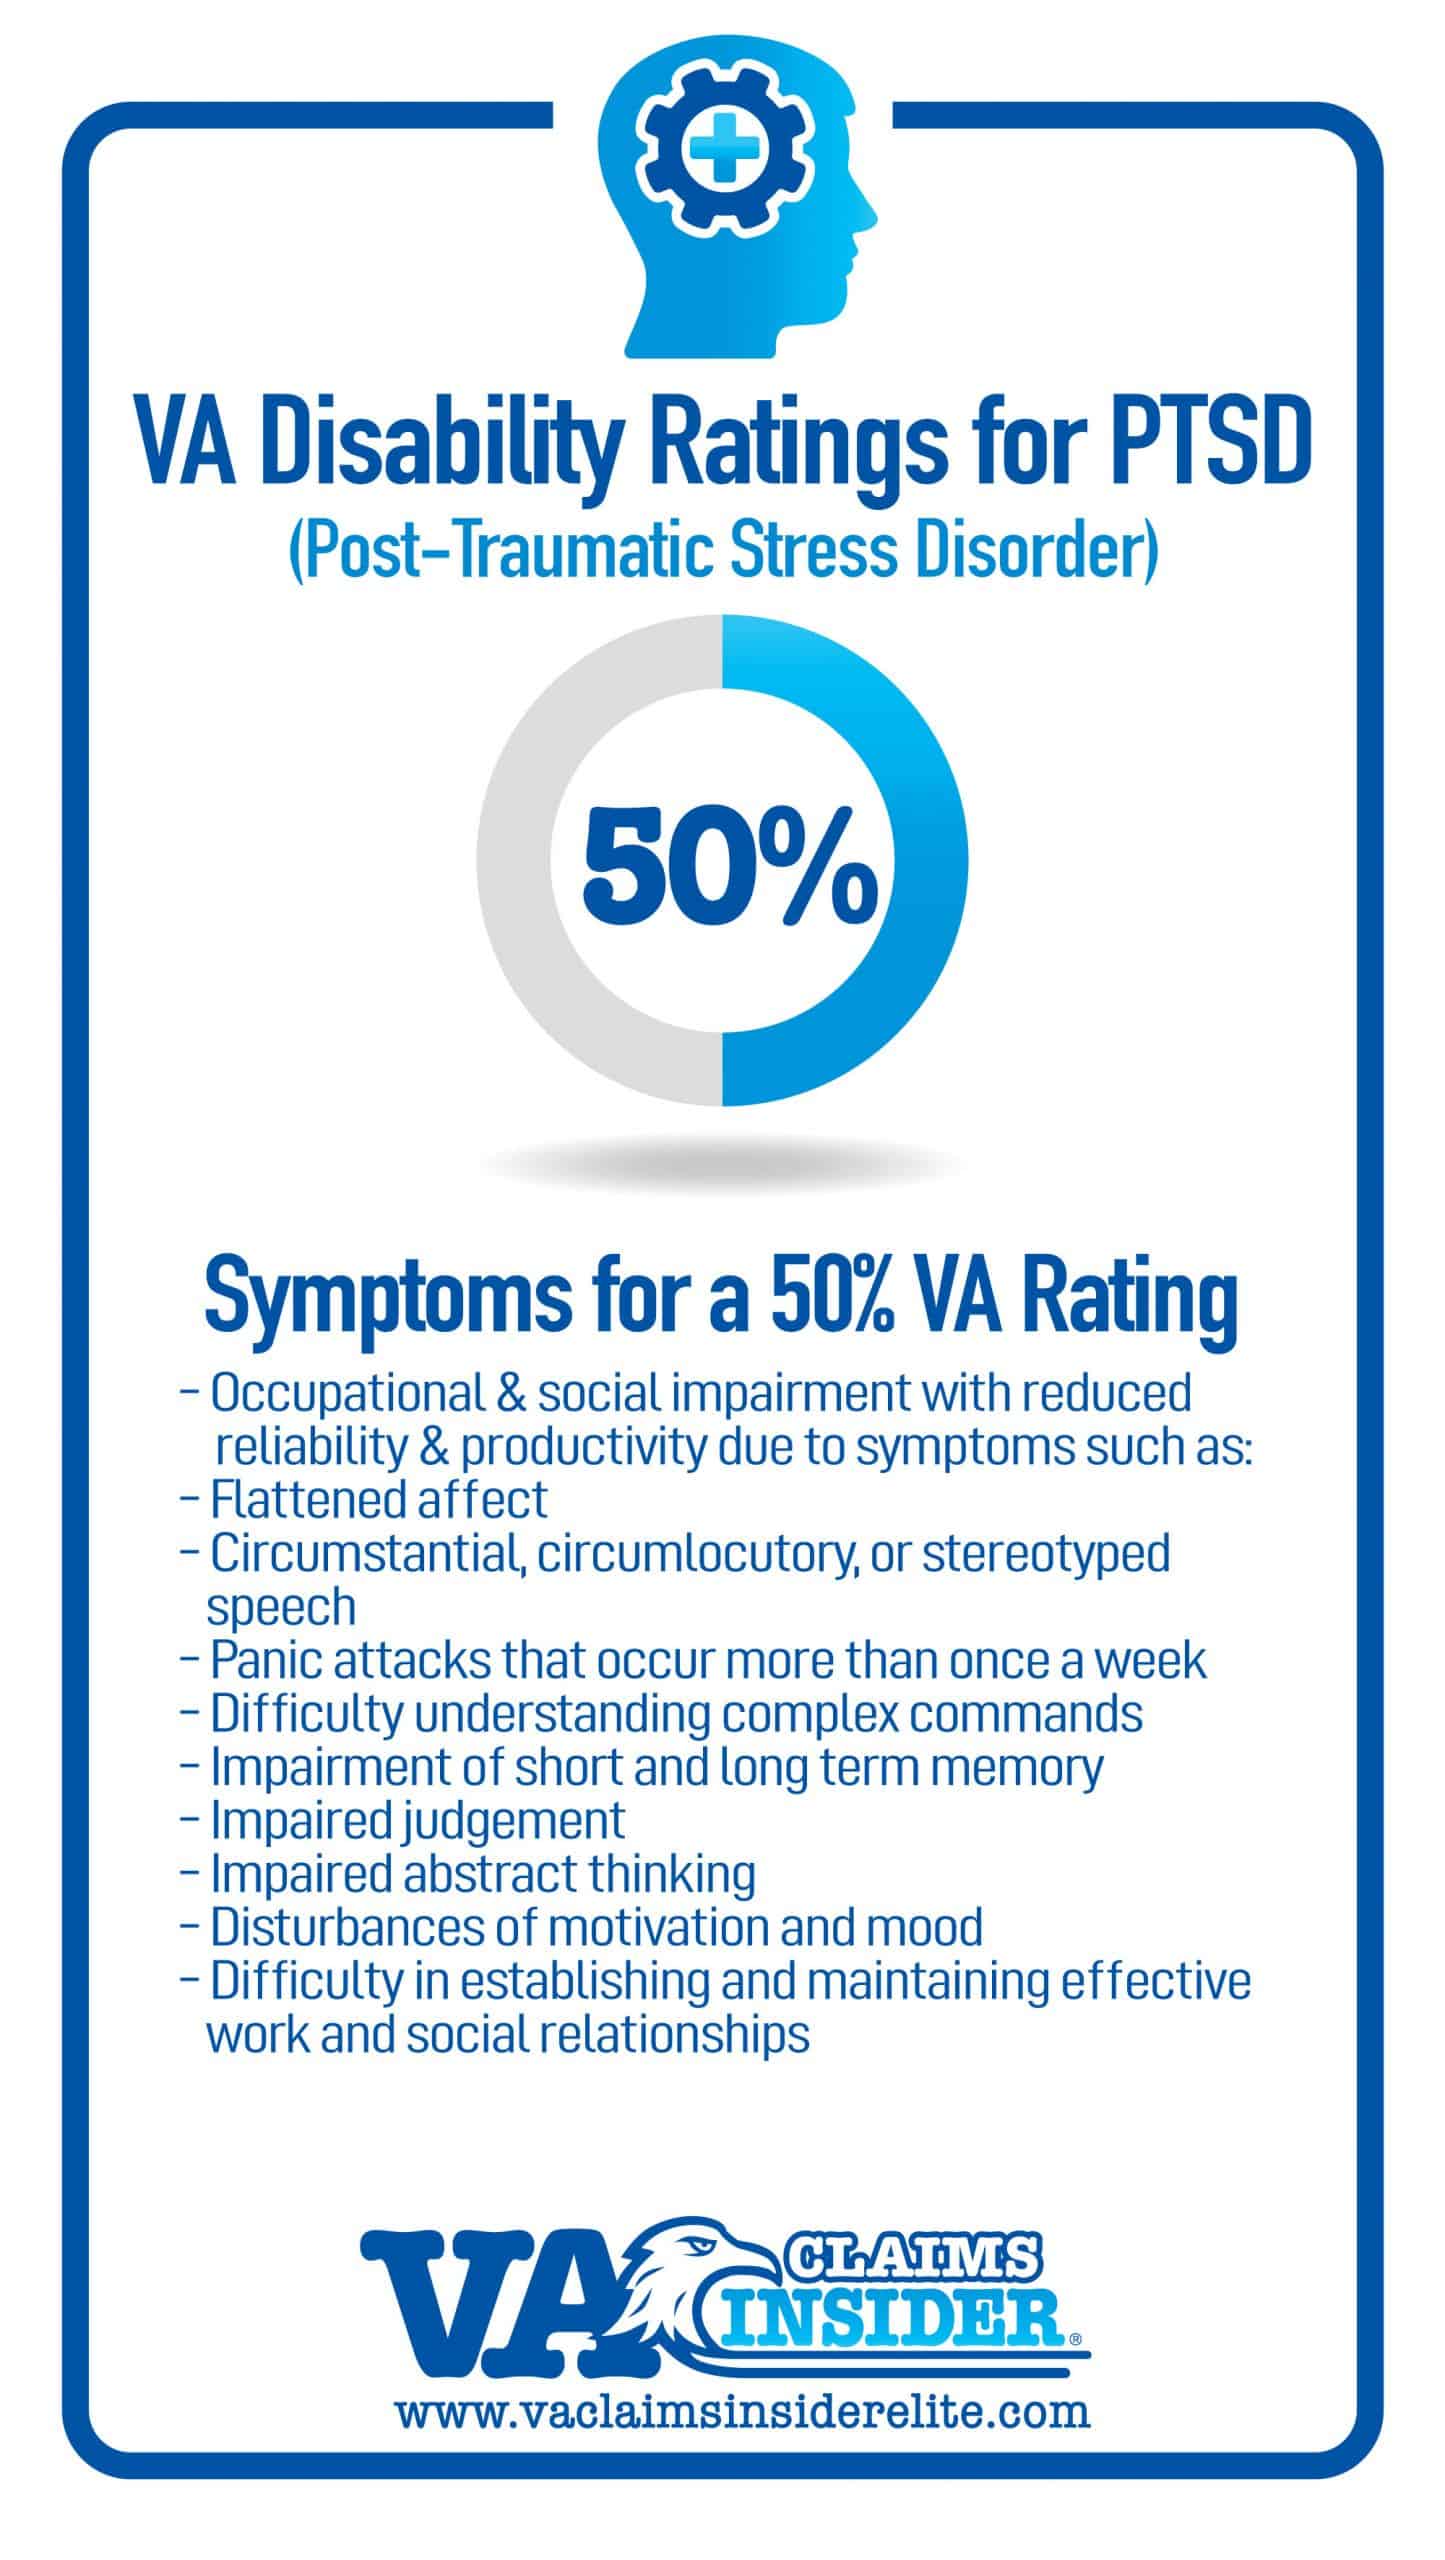 Symptoms of 50 Percent VA Rating for PTSD